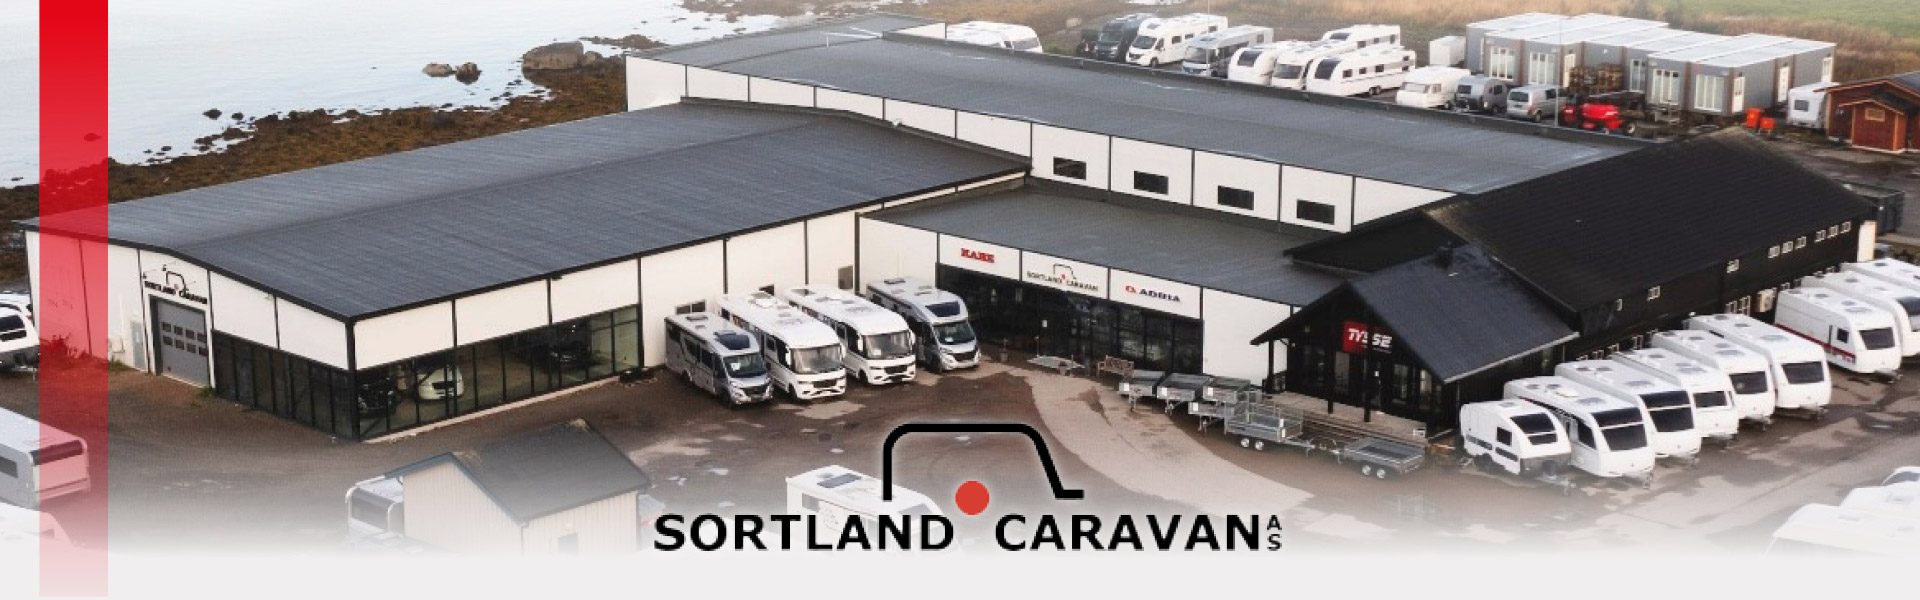 Sortland Caravan